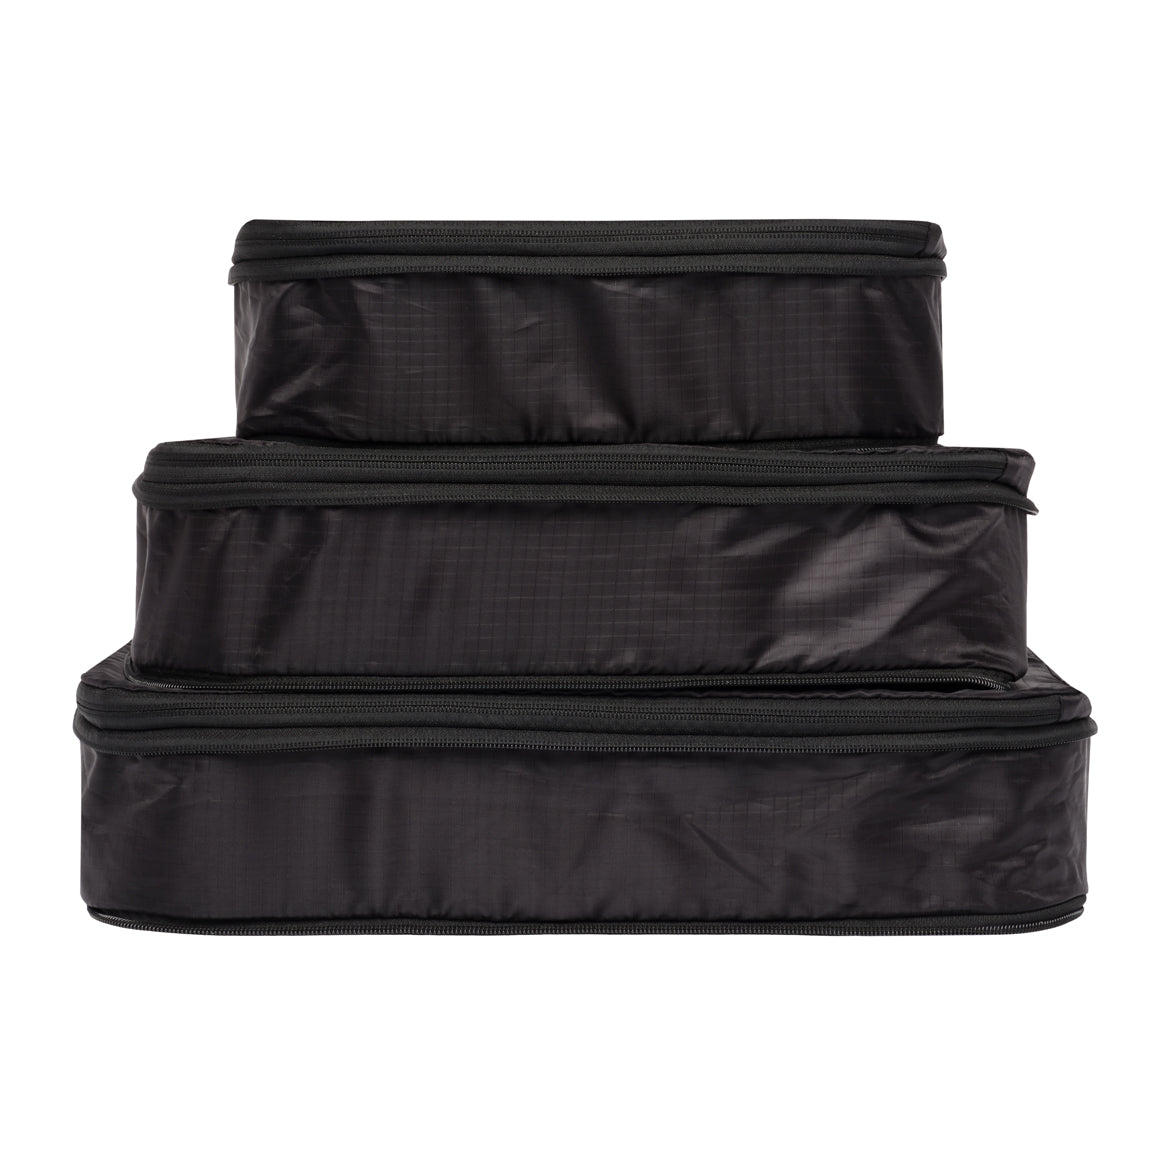 Bag-all Basic Compression Packing Cubes, 3-pack Black